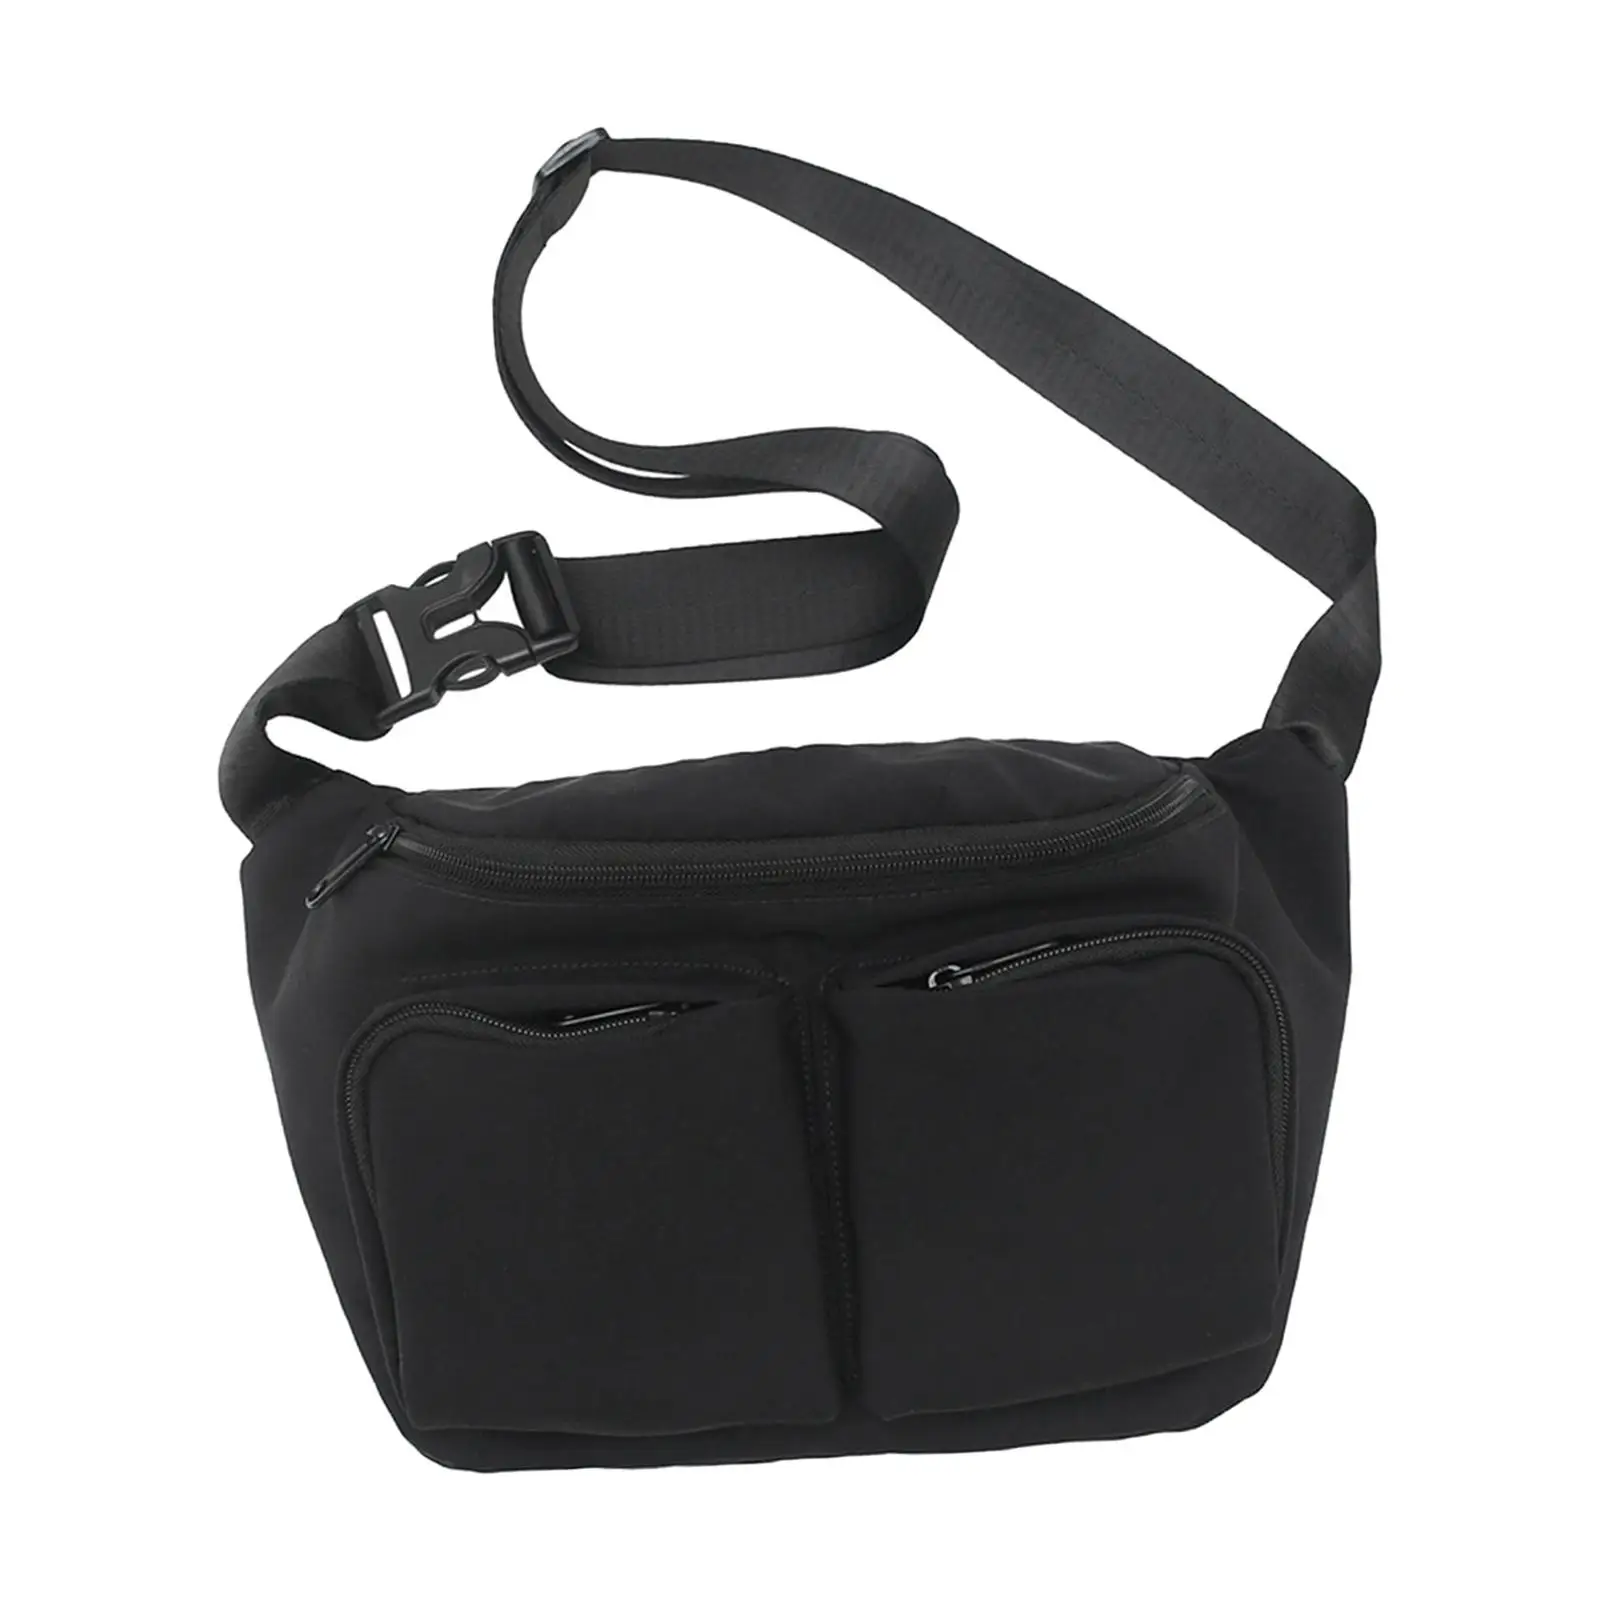 Chest Bag Shoulder Bag One Strap Backpack Size 34x10x22cm Multiple Pockets Excellent Workmanship Zipped Compartment Machine Wash